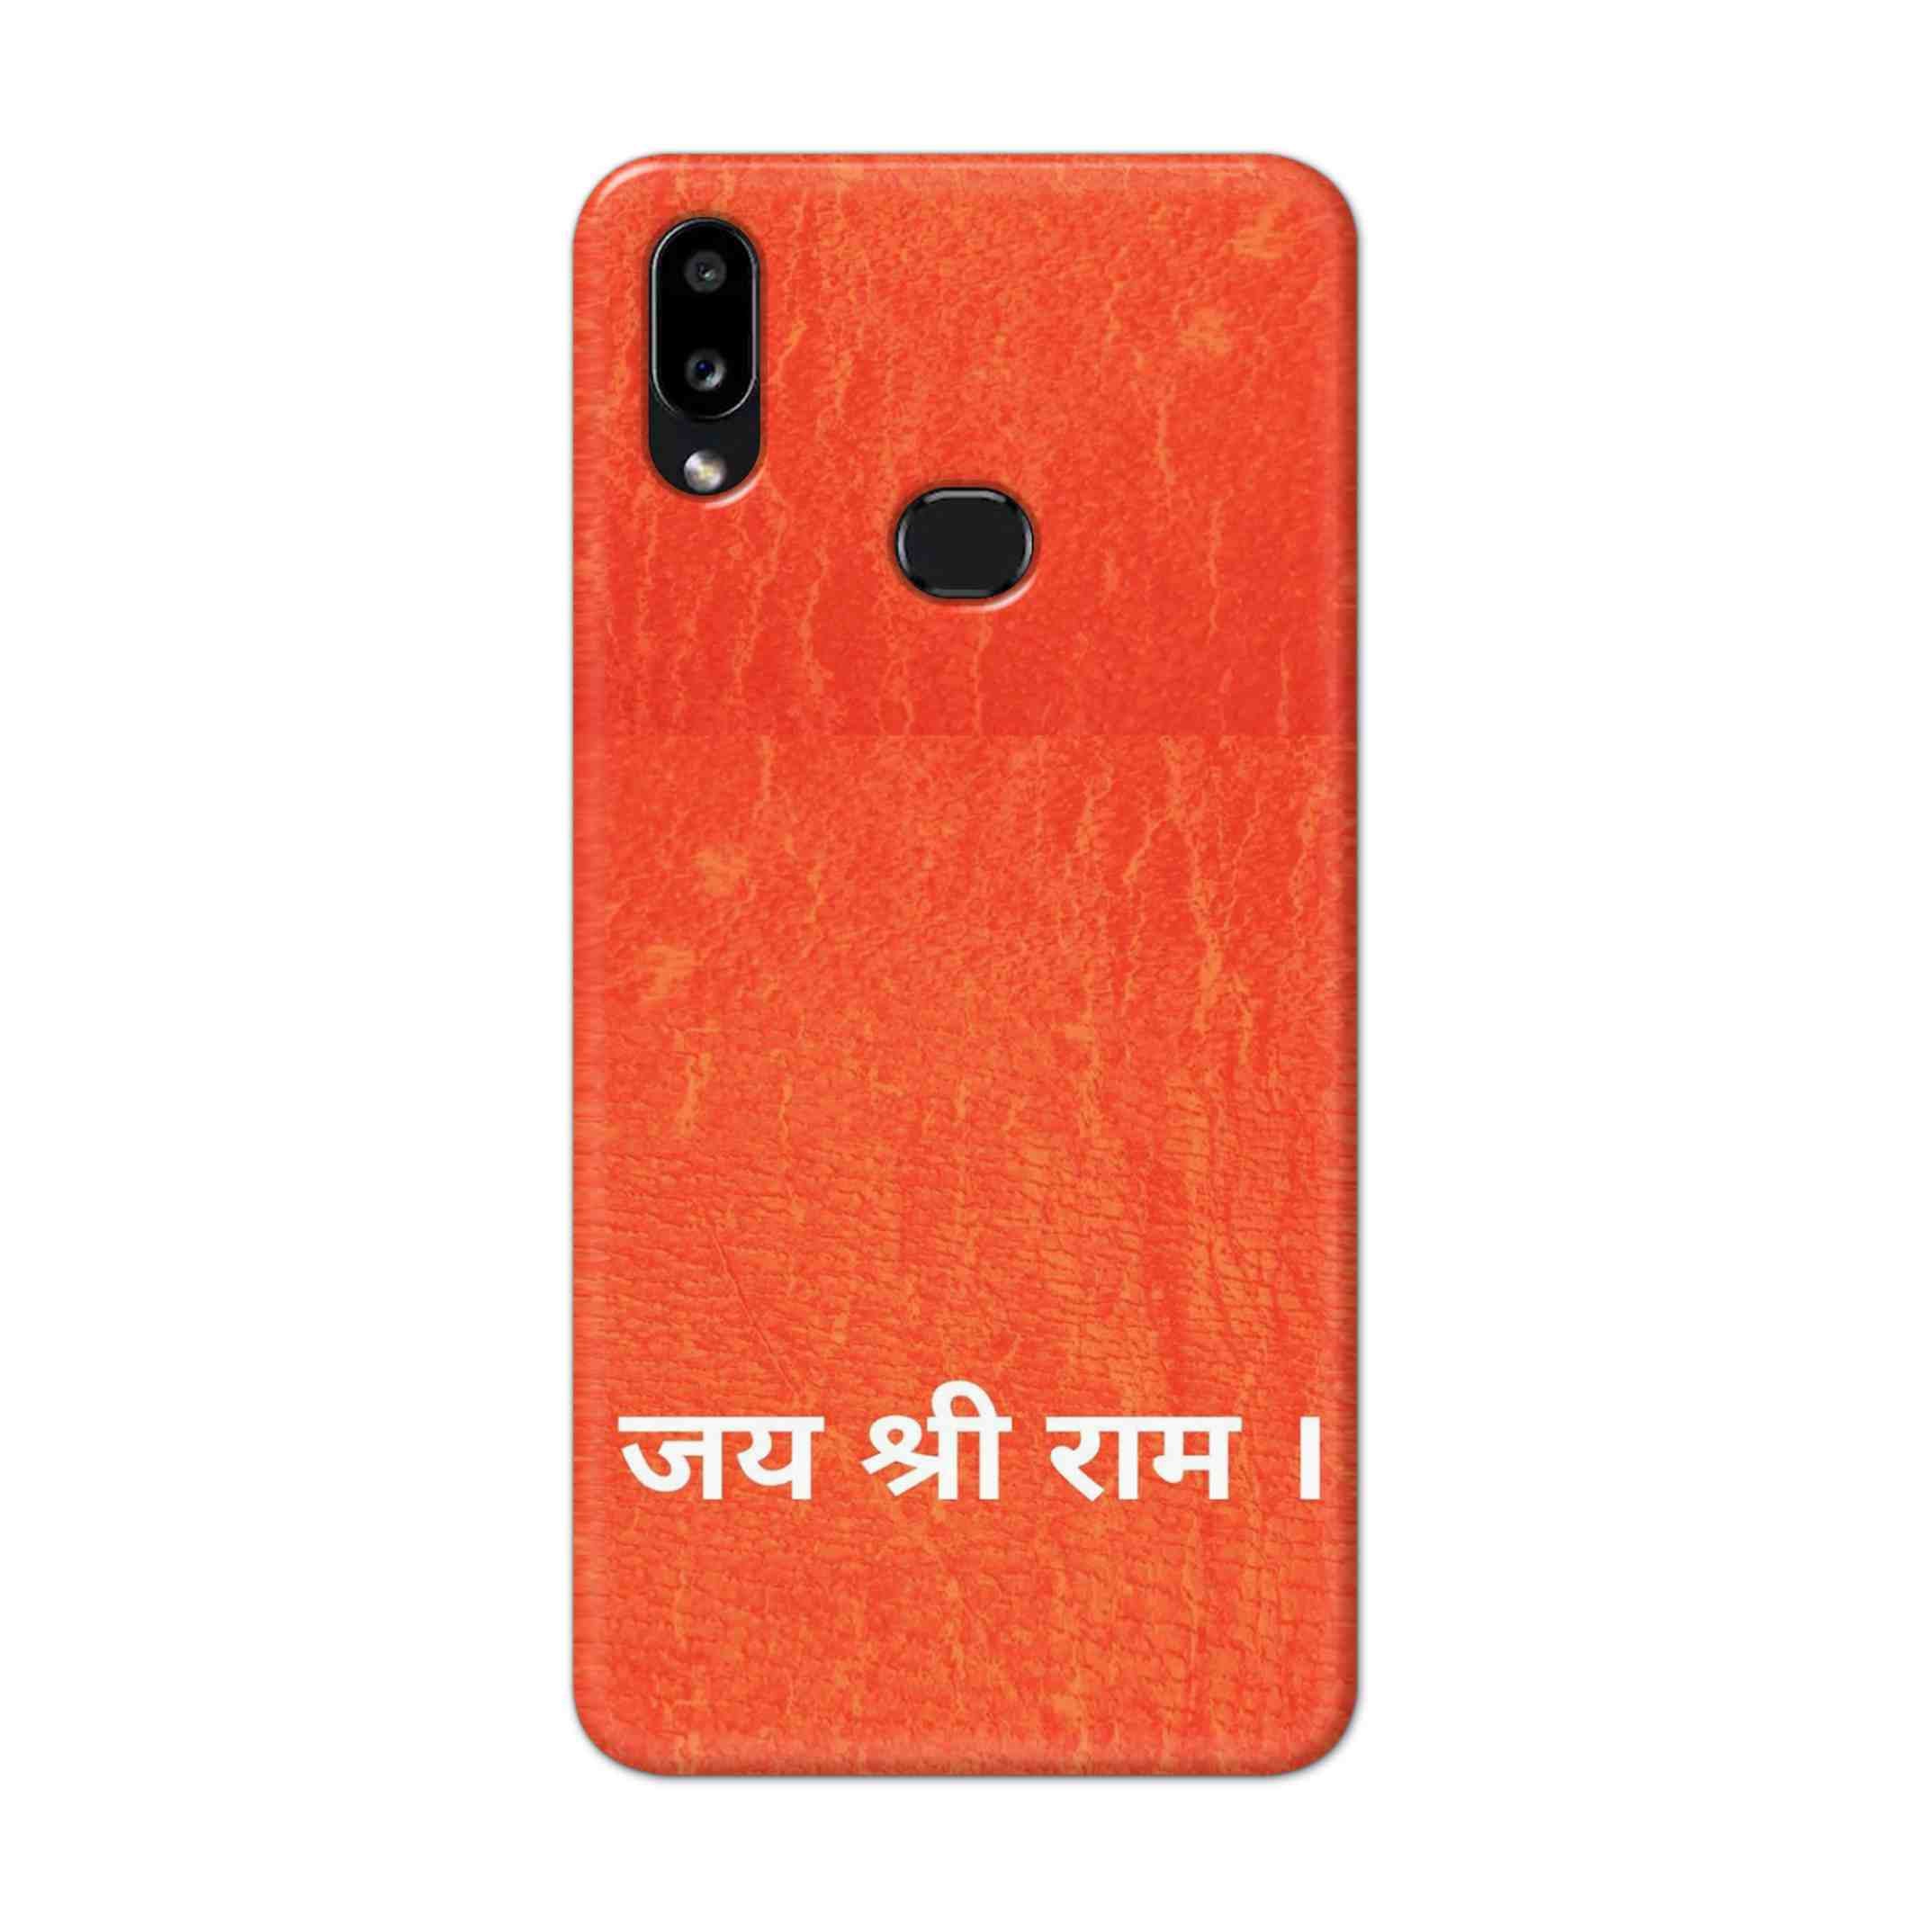 Buy Jai Shree Ram Hard Back Mobile Phone Case Cover For Samsung Galaxy M01s Online